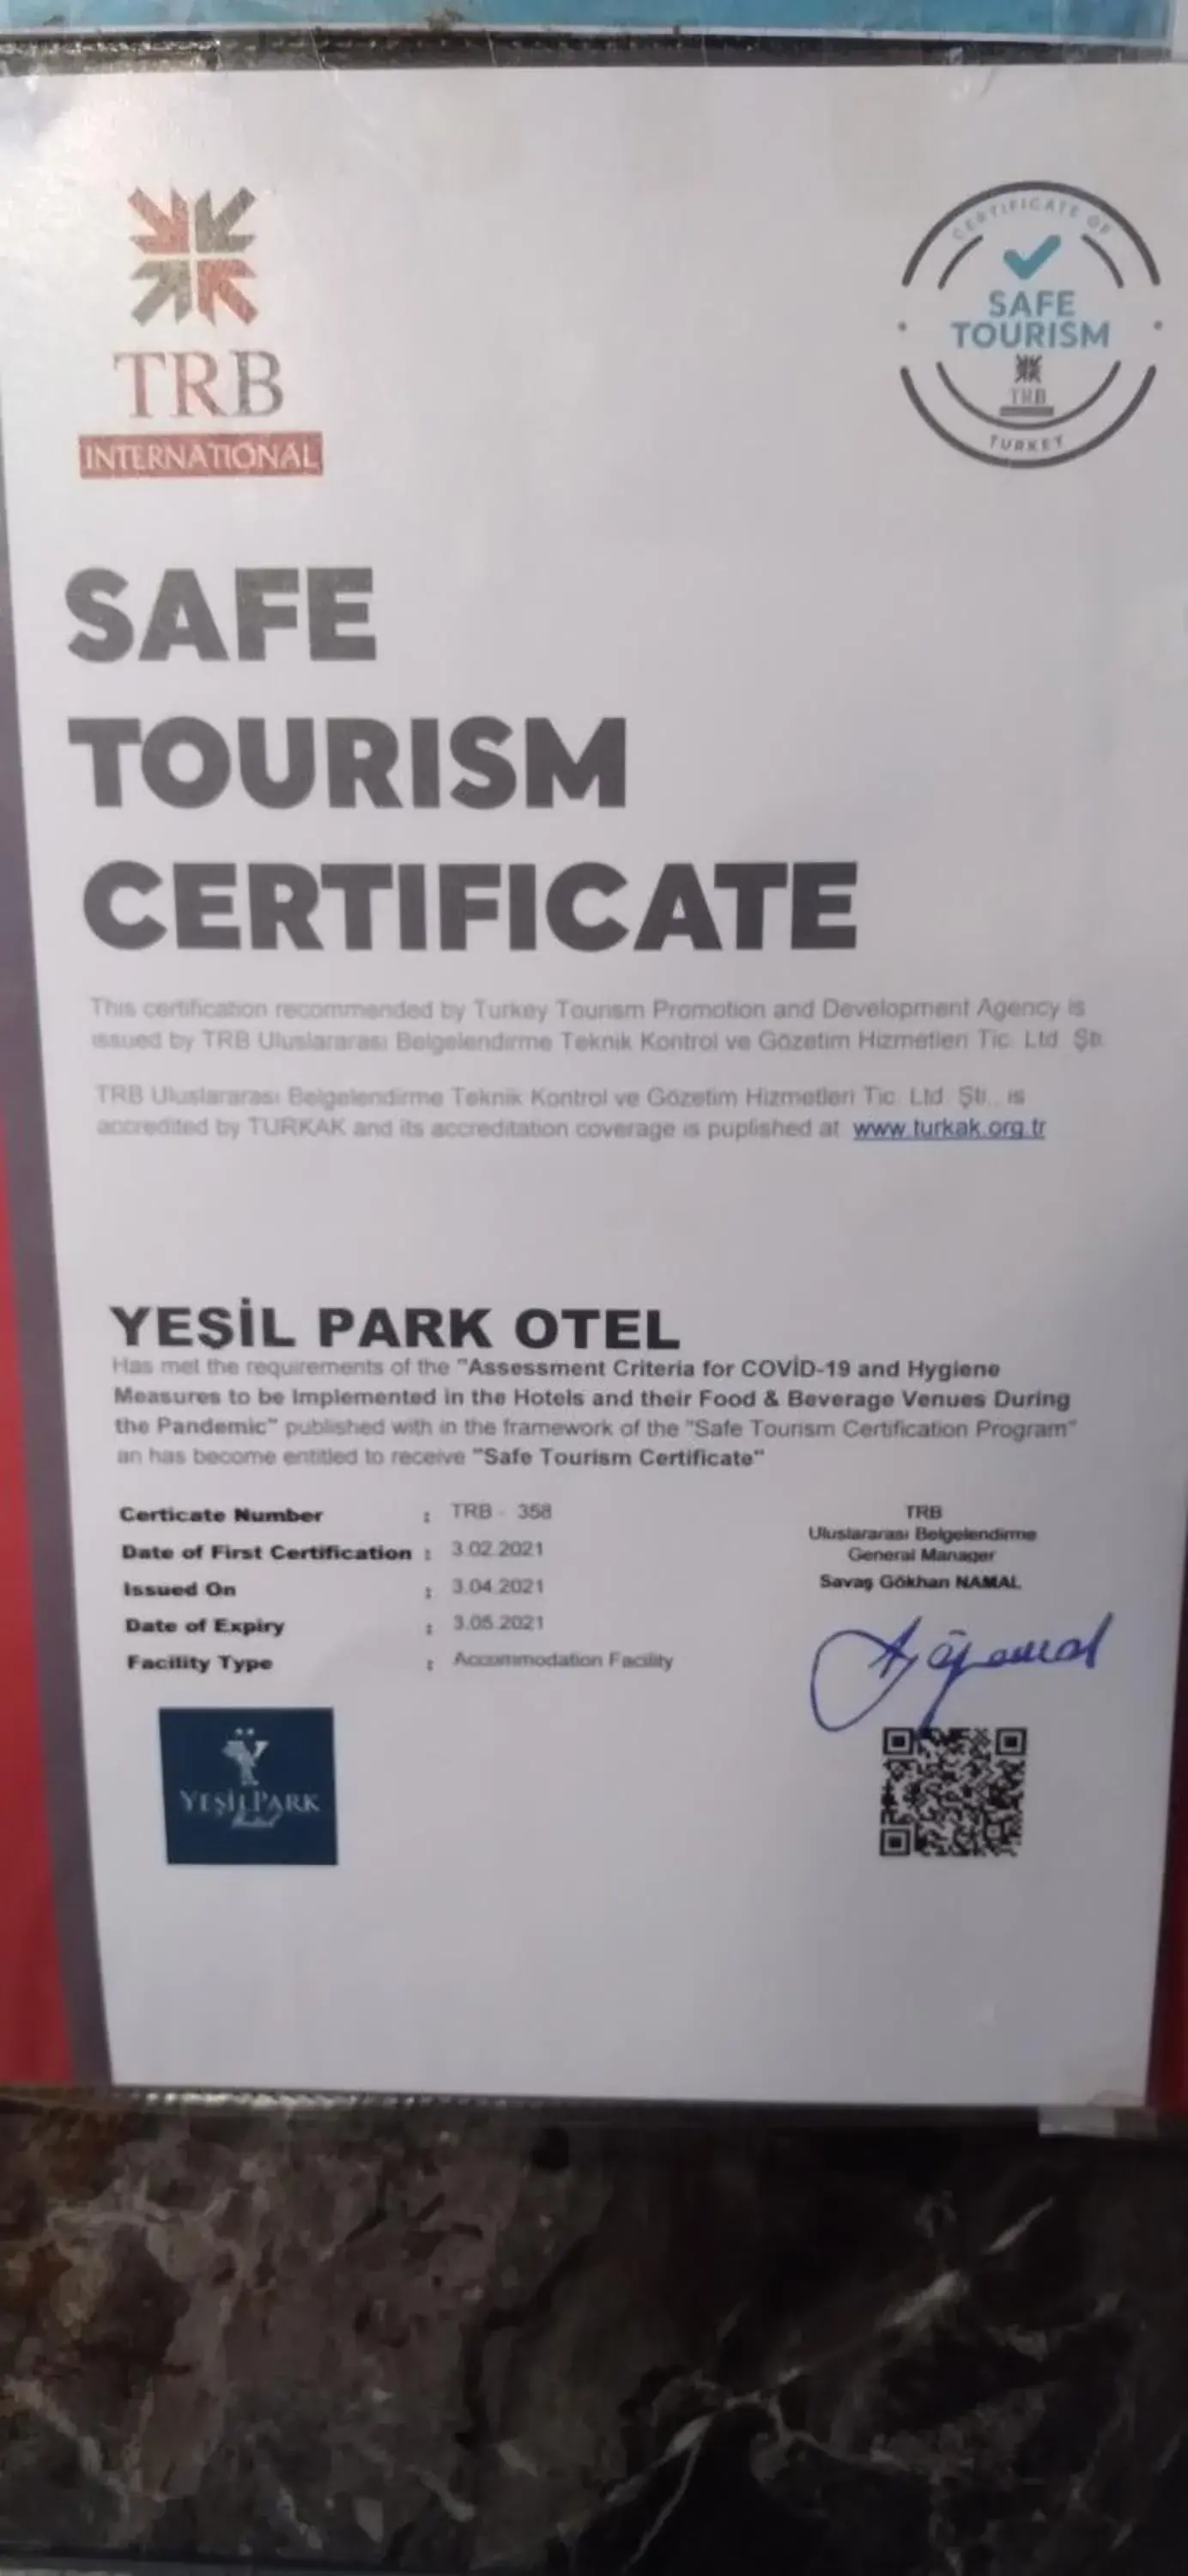 Certificate/Award in Hotel Yesilpark